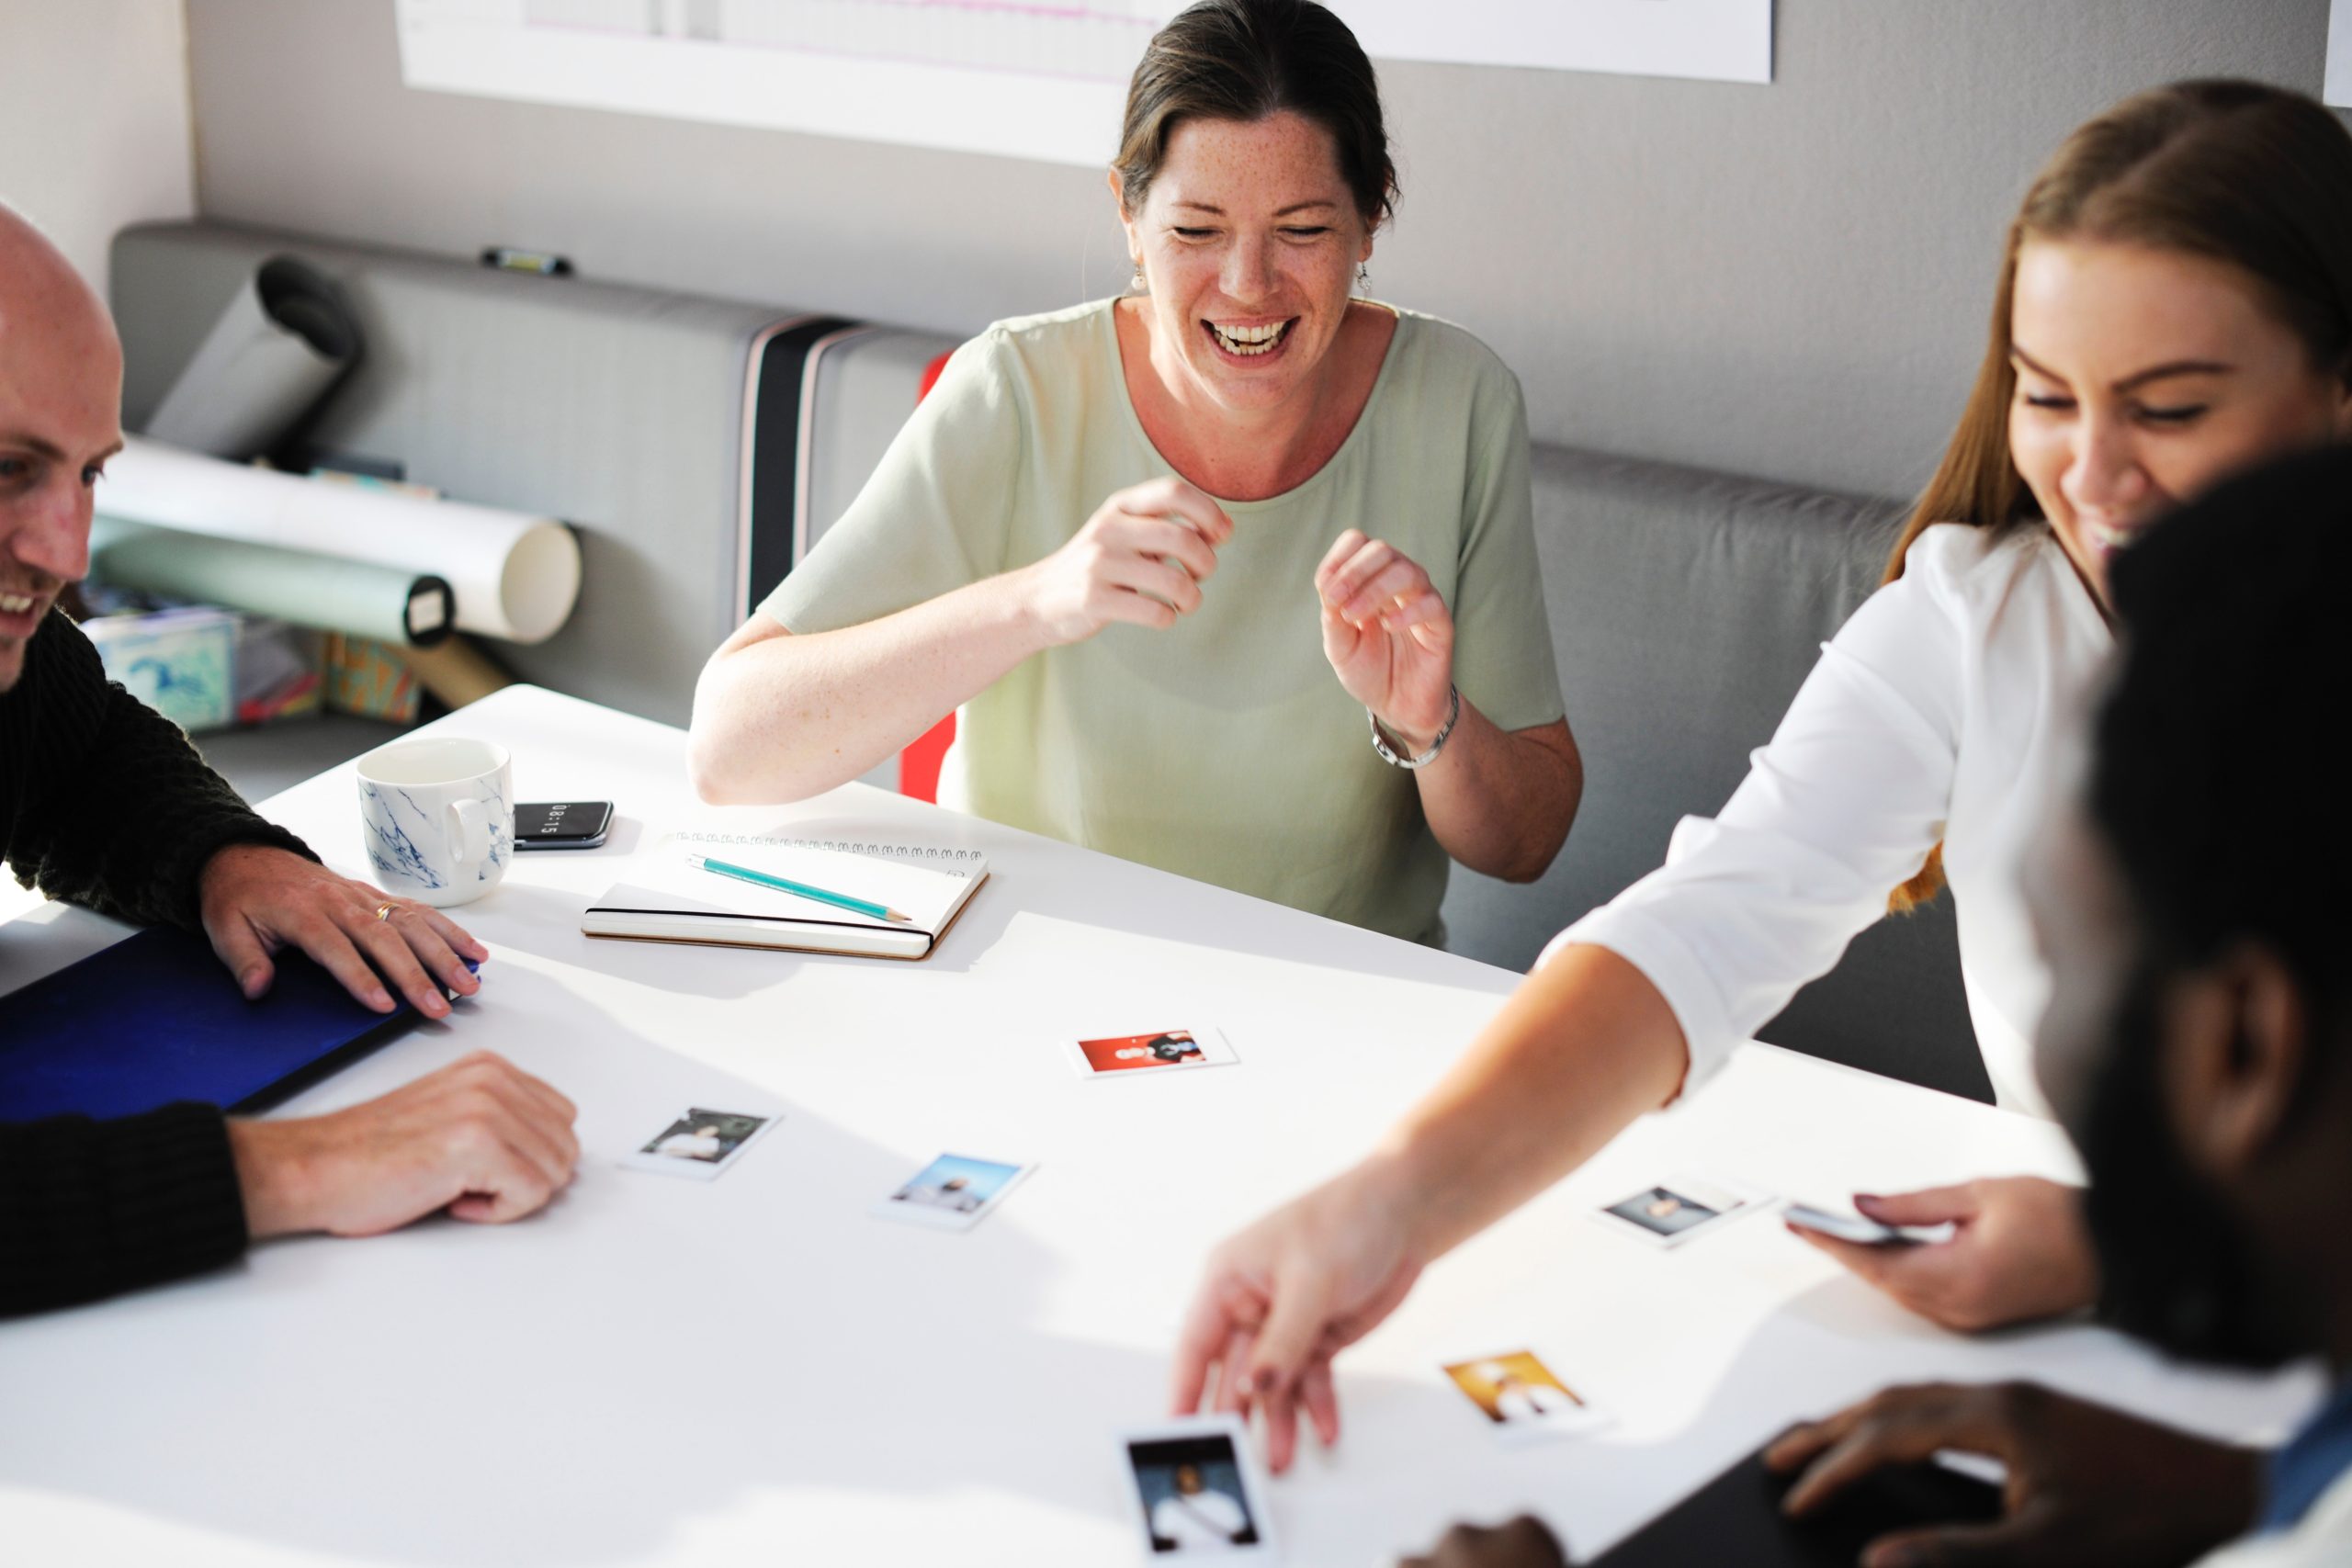 5 Ways to Make Staff Meetings More Engaging